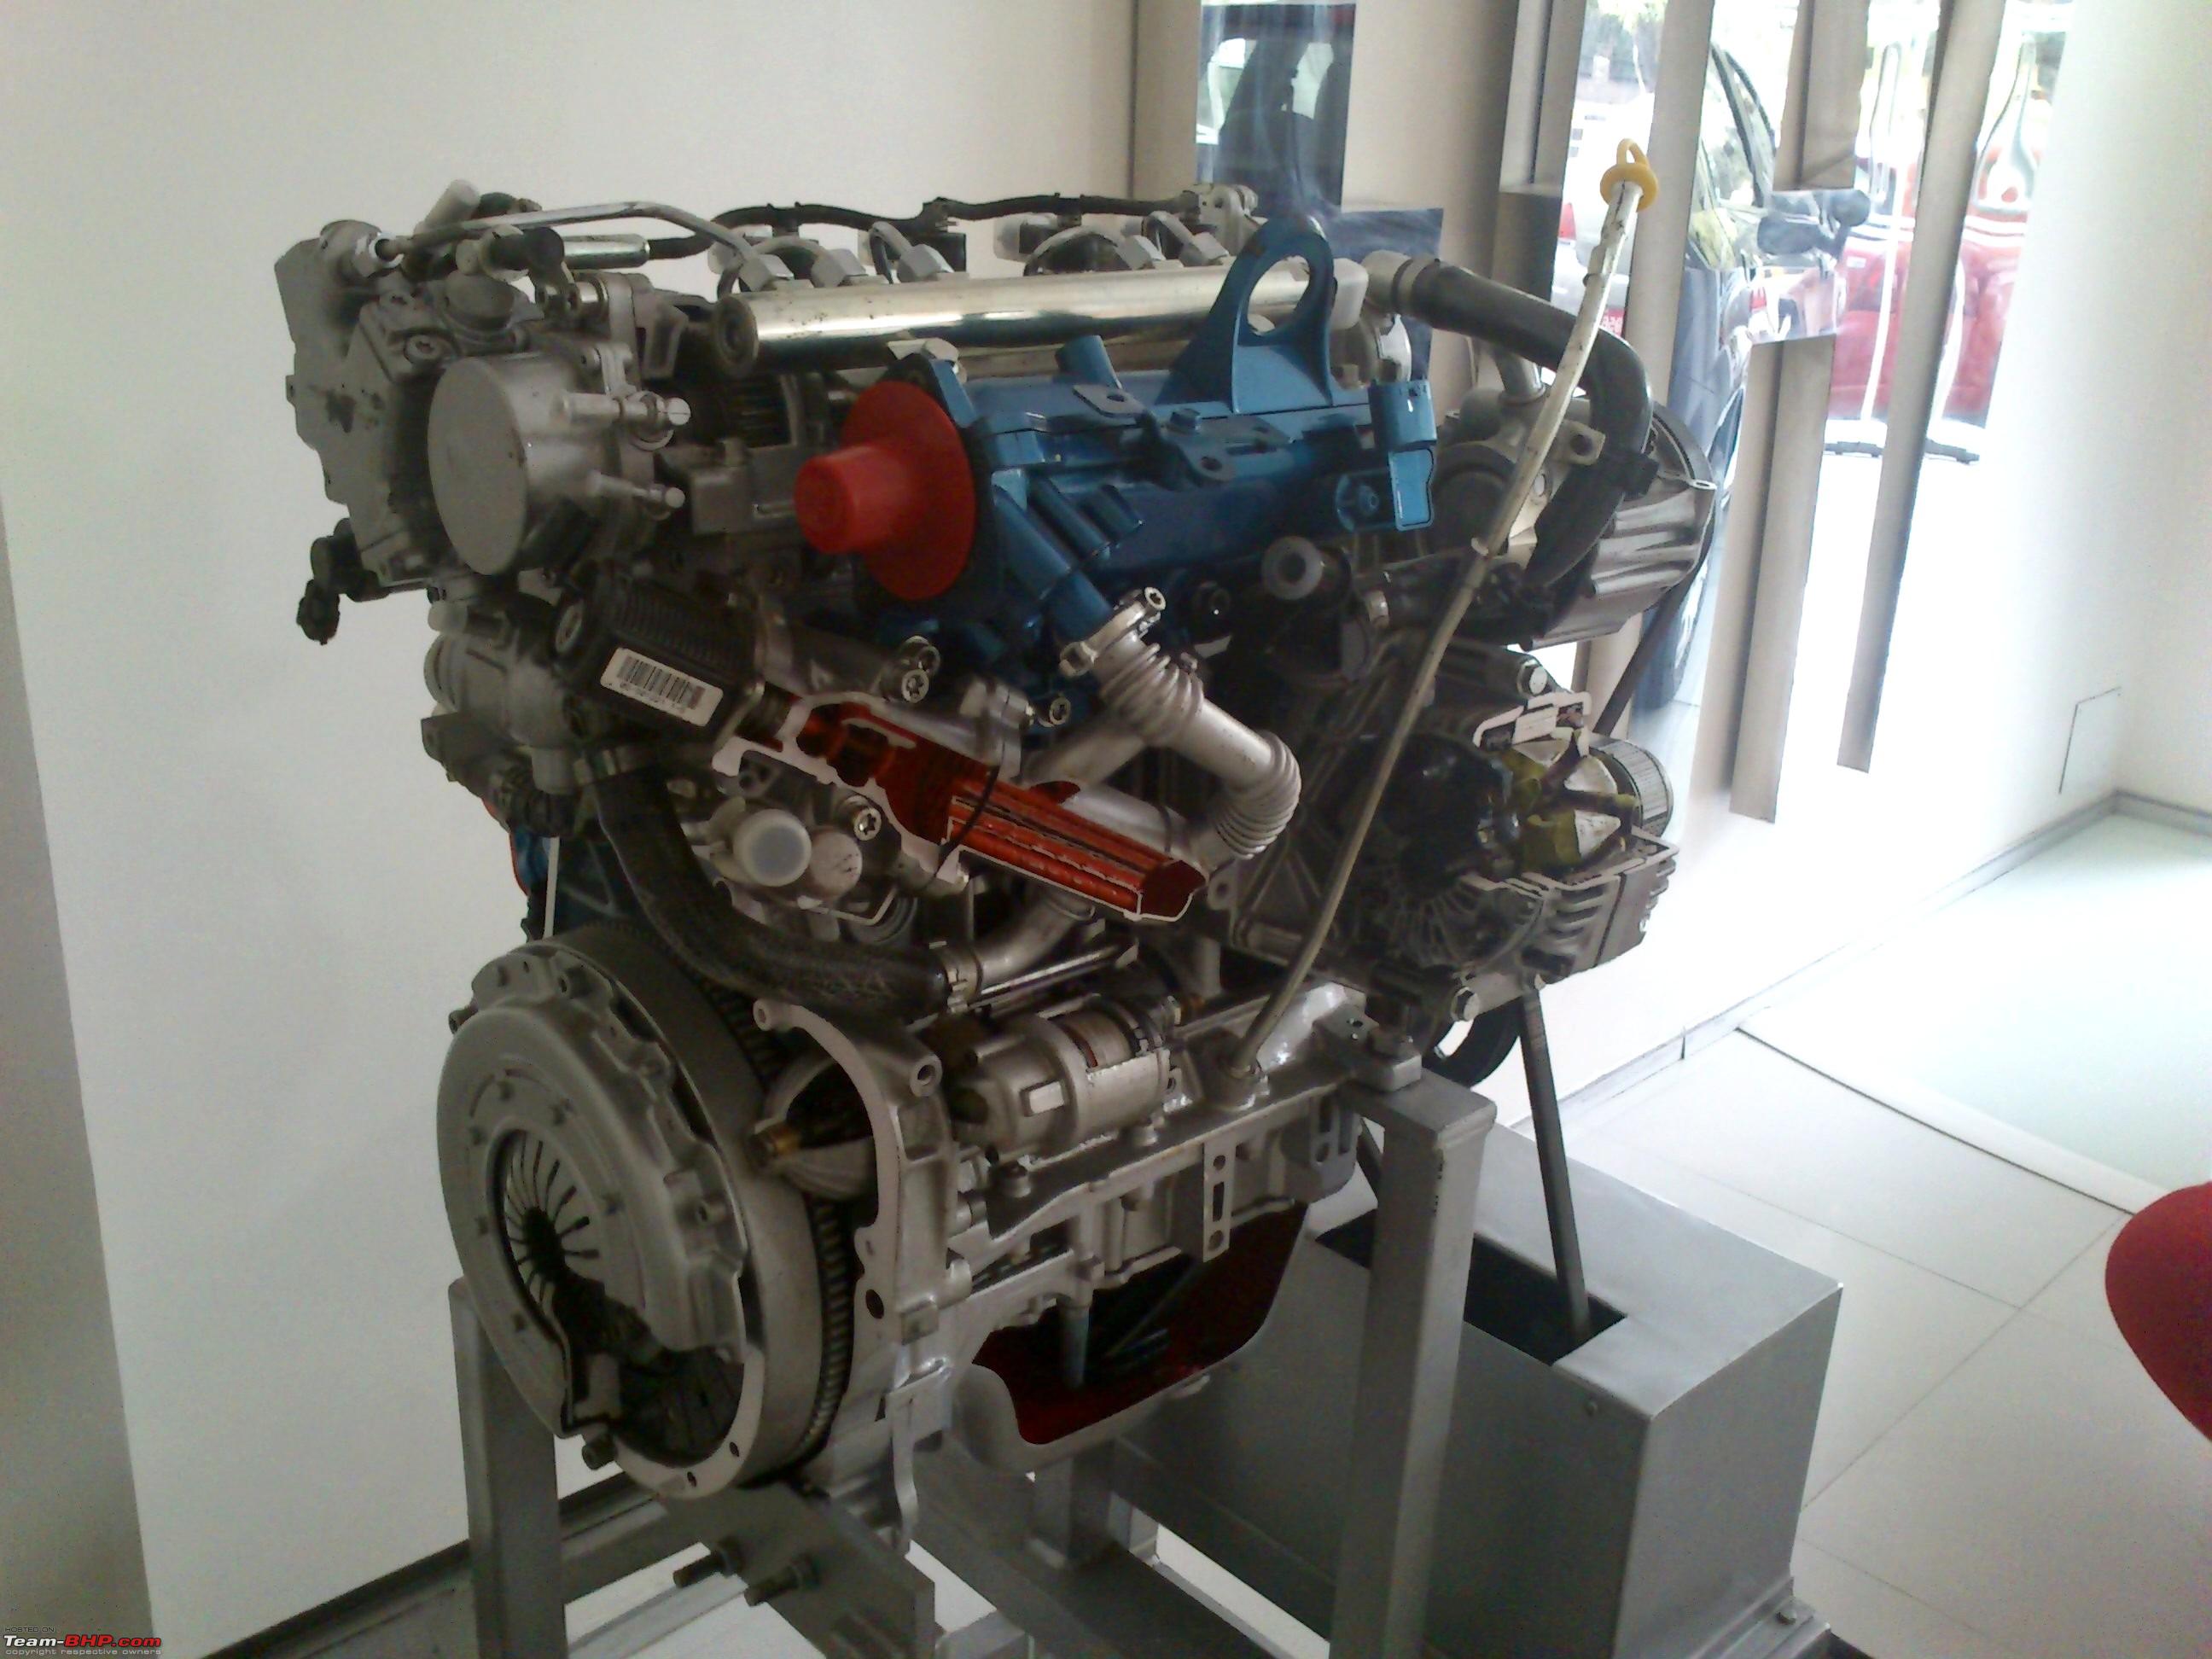 Engine Pics The Fiat Multijet 1.3 90 VGT TeamBHP